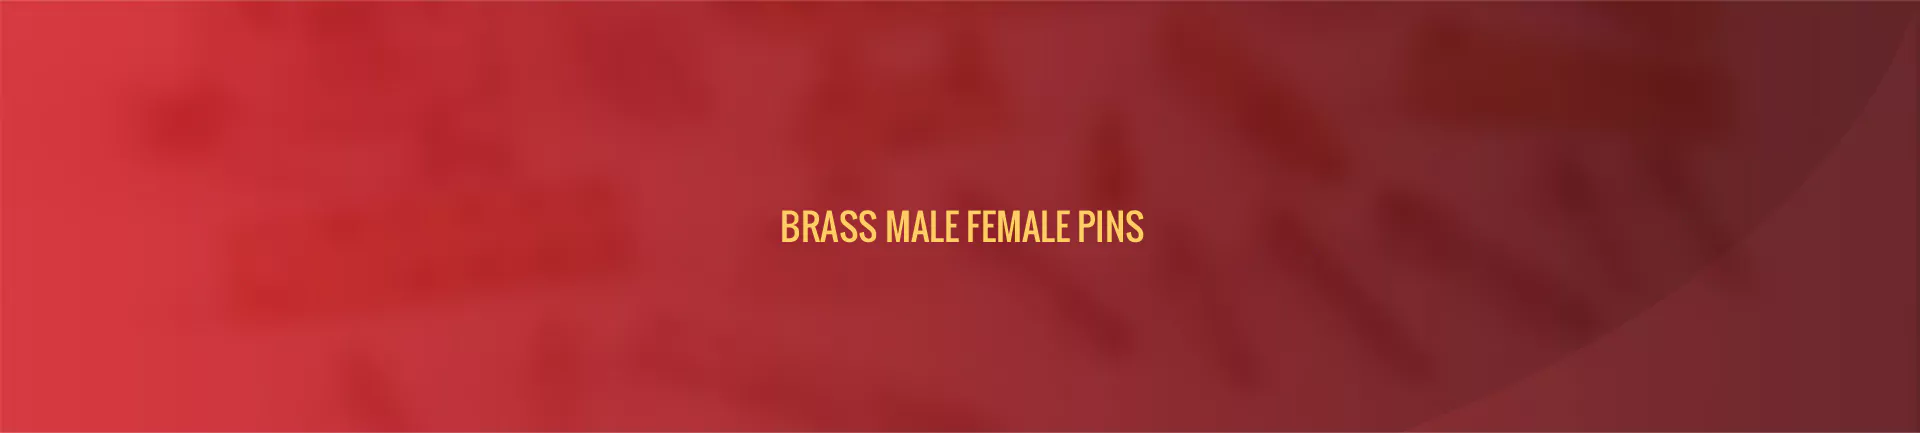 brass-male-female-pins-banner